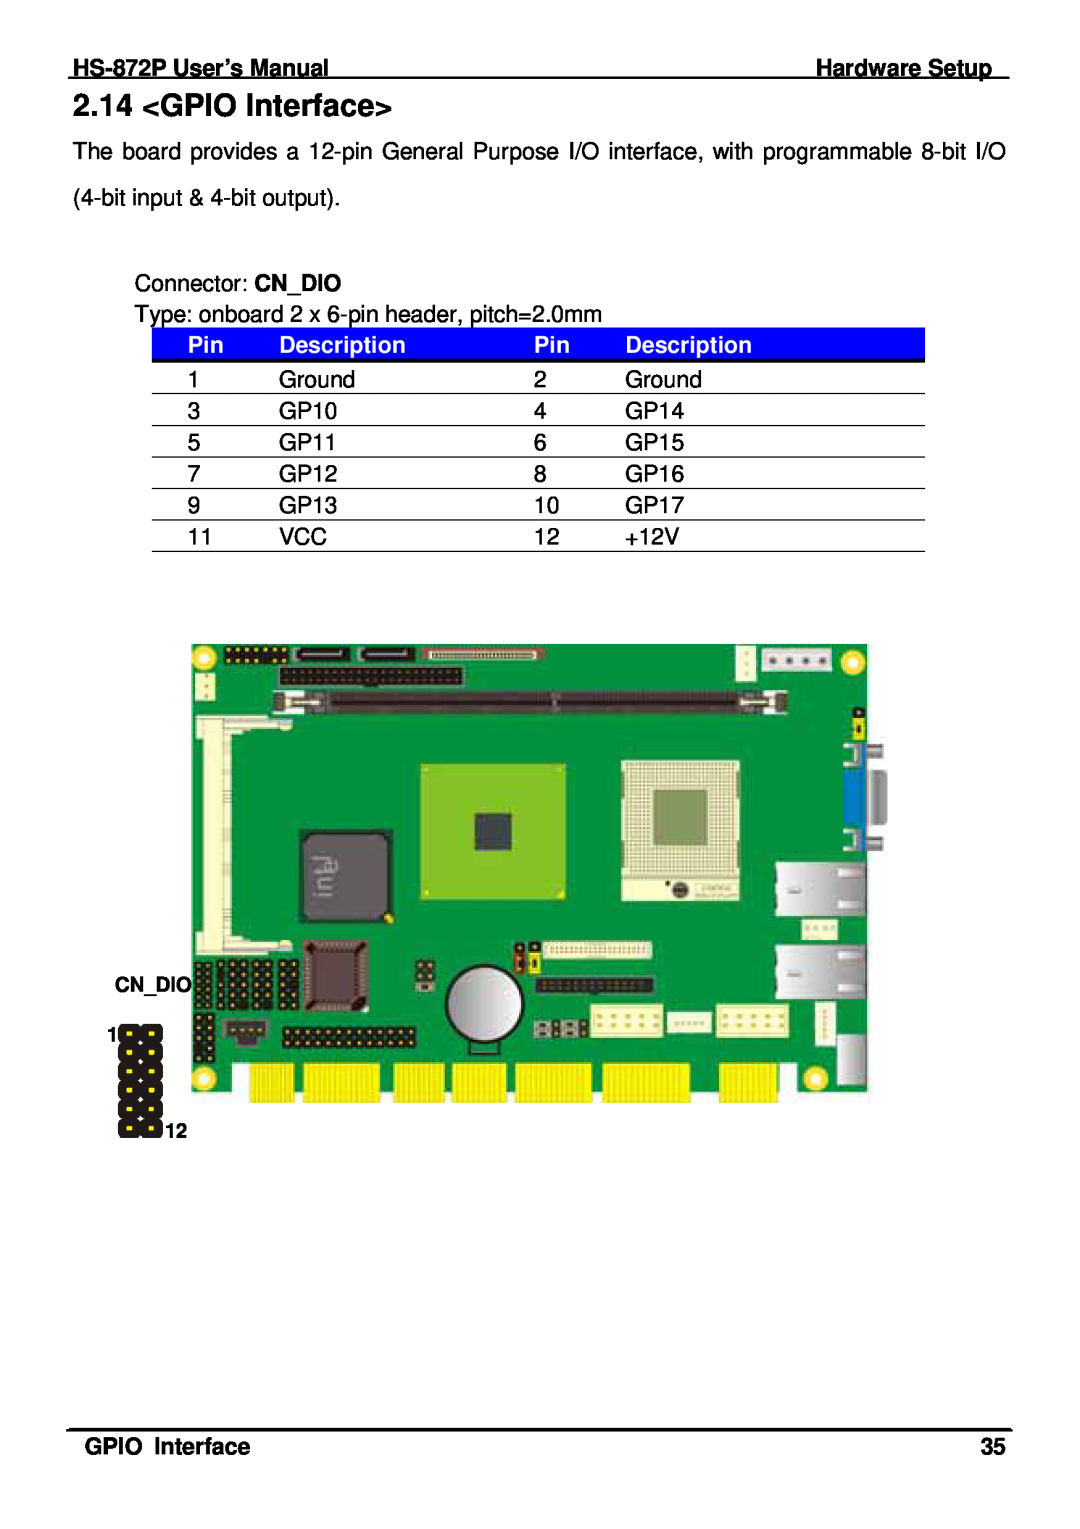 Intel half-size single board computer user manual GPIO Interface, HS-872P User’s Manual, Hardware Setup, Description 